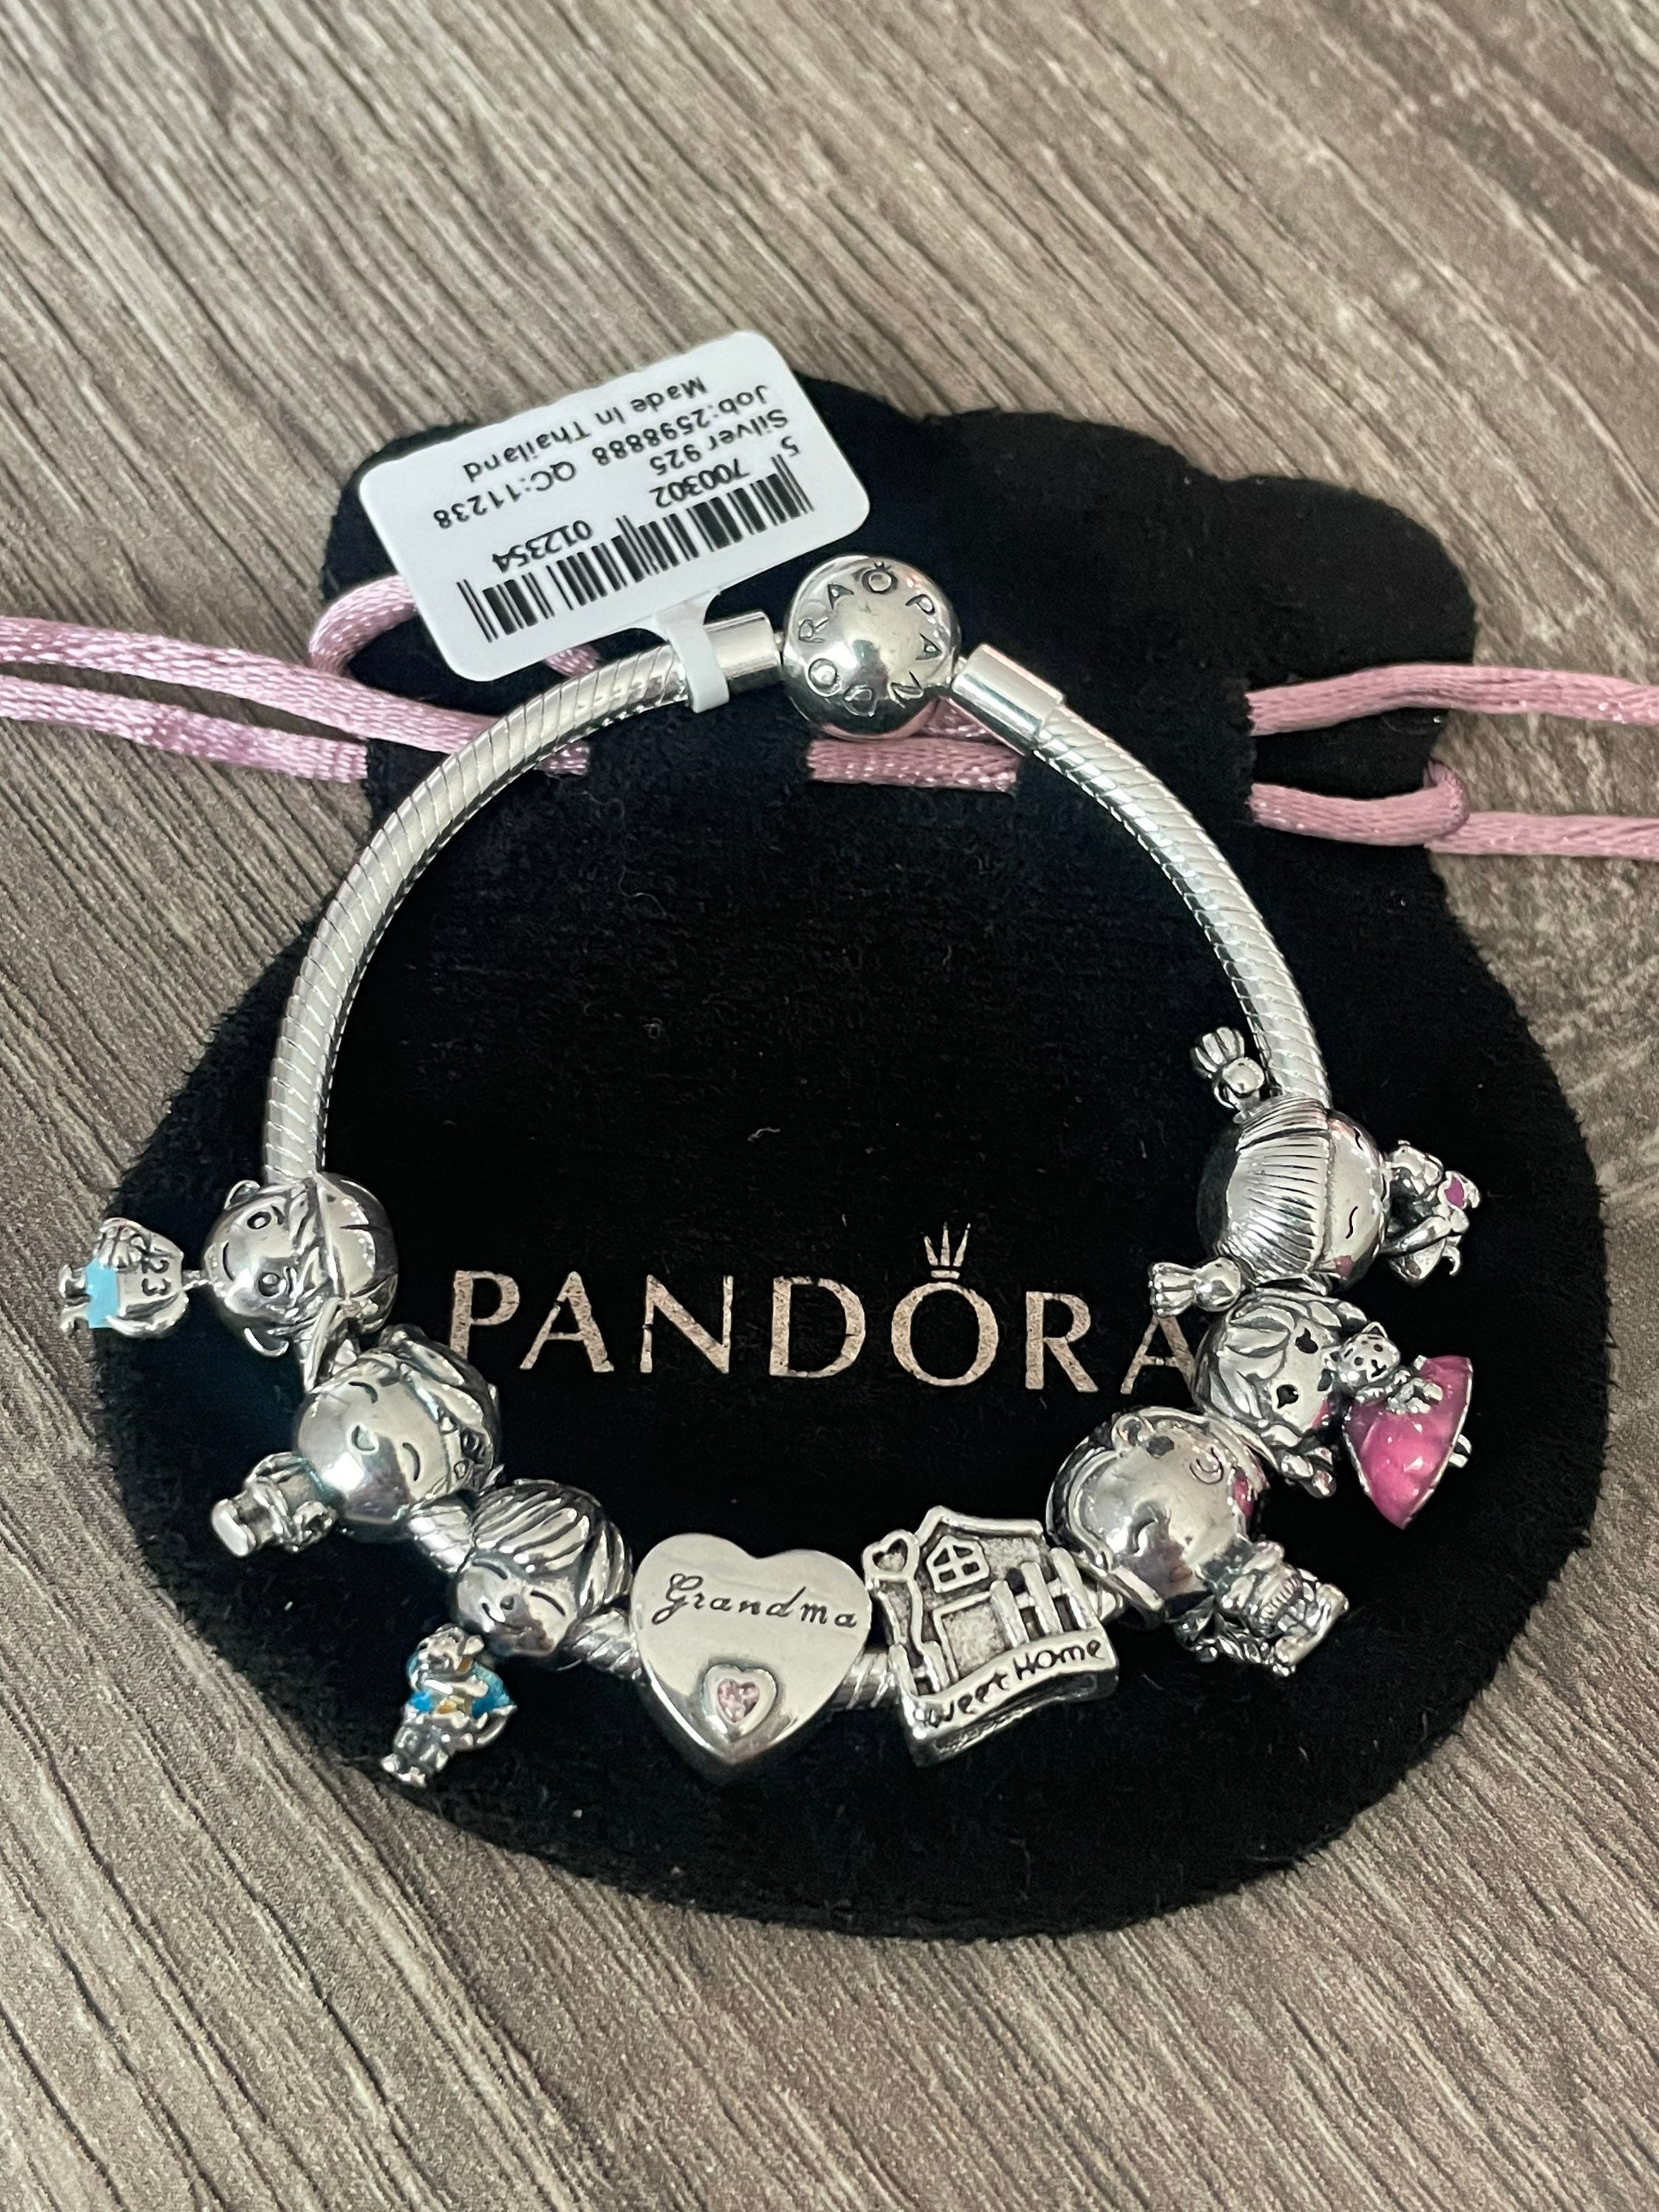 Pandora Bracelet With Grandma and Grandkids Themed Charms - Etsy